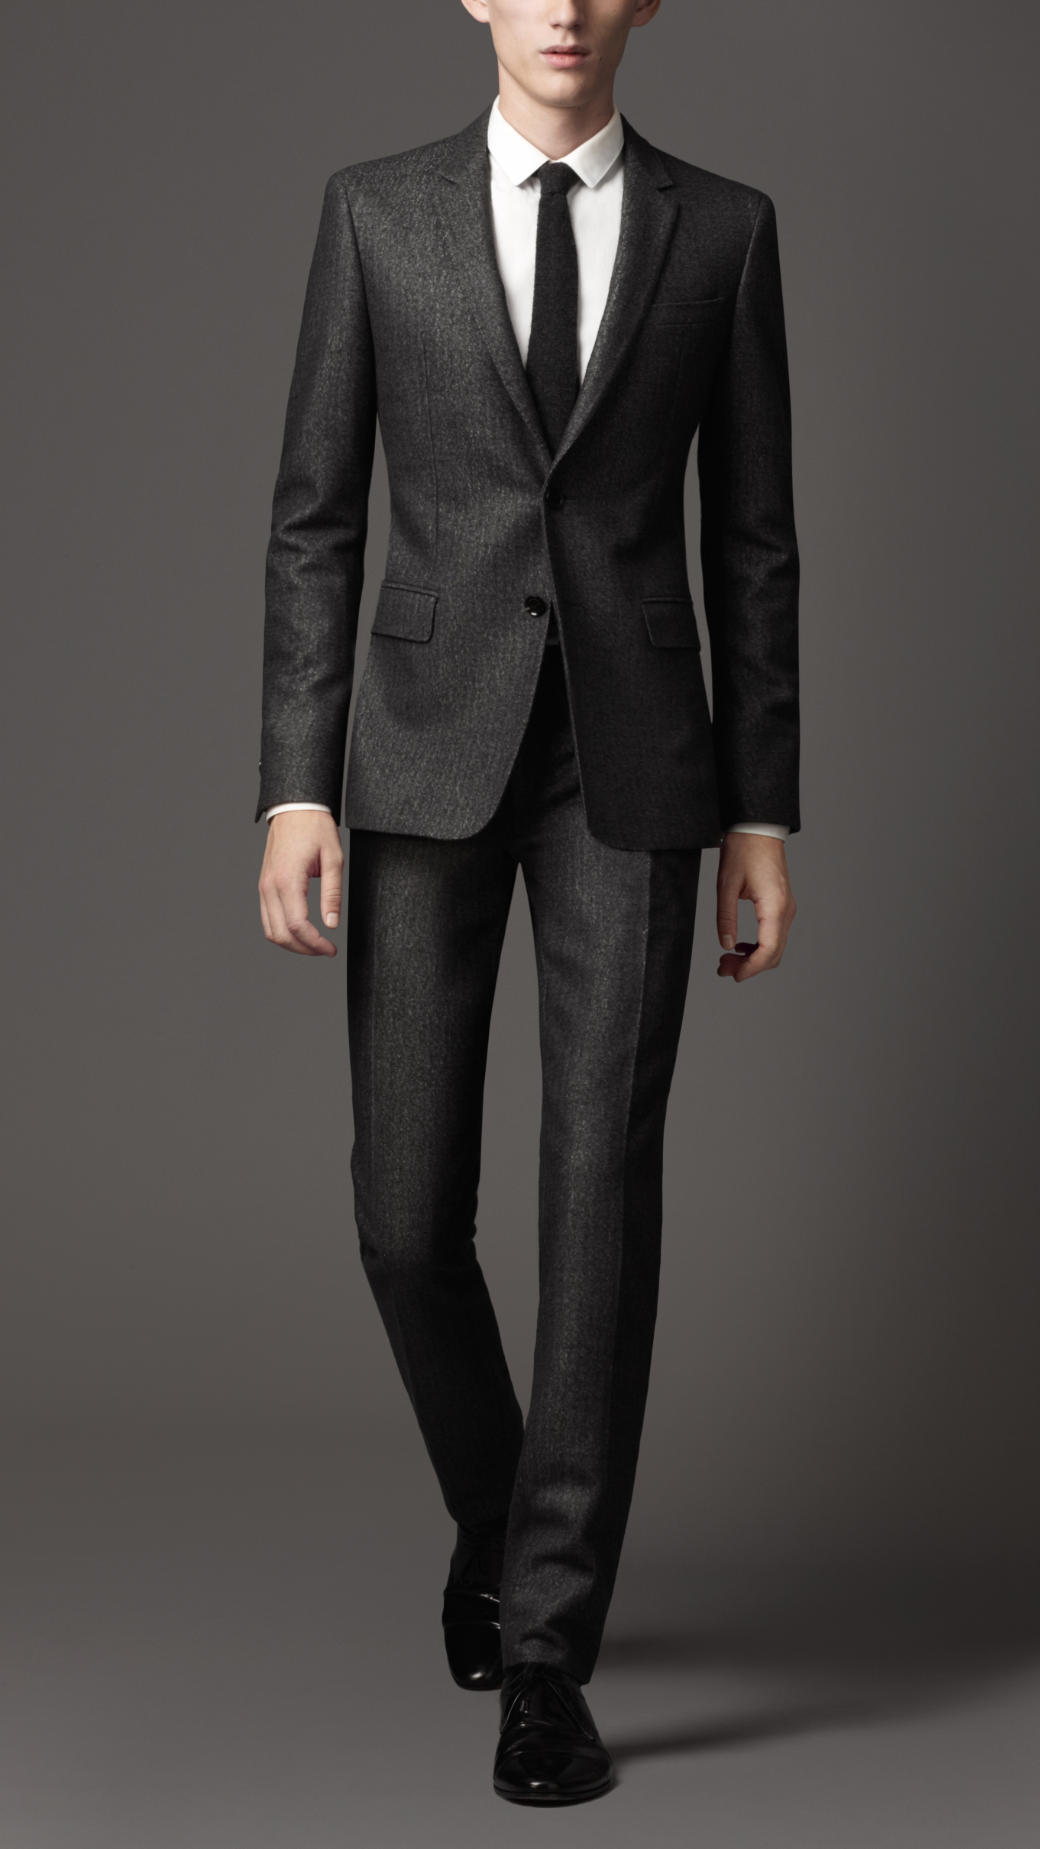 Lyst - Burberry Slim Fit Virgin Wool Blend Suit in Gray for Men